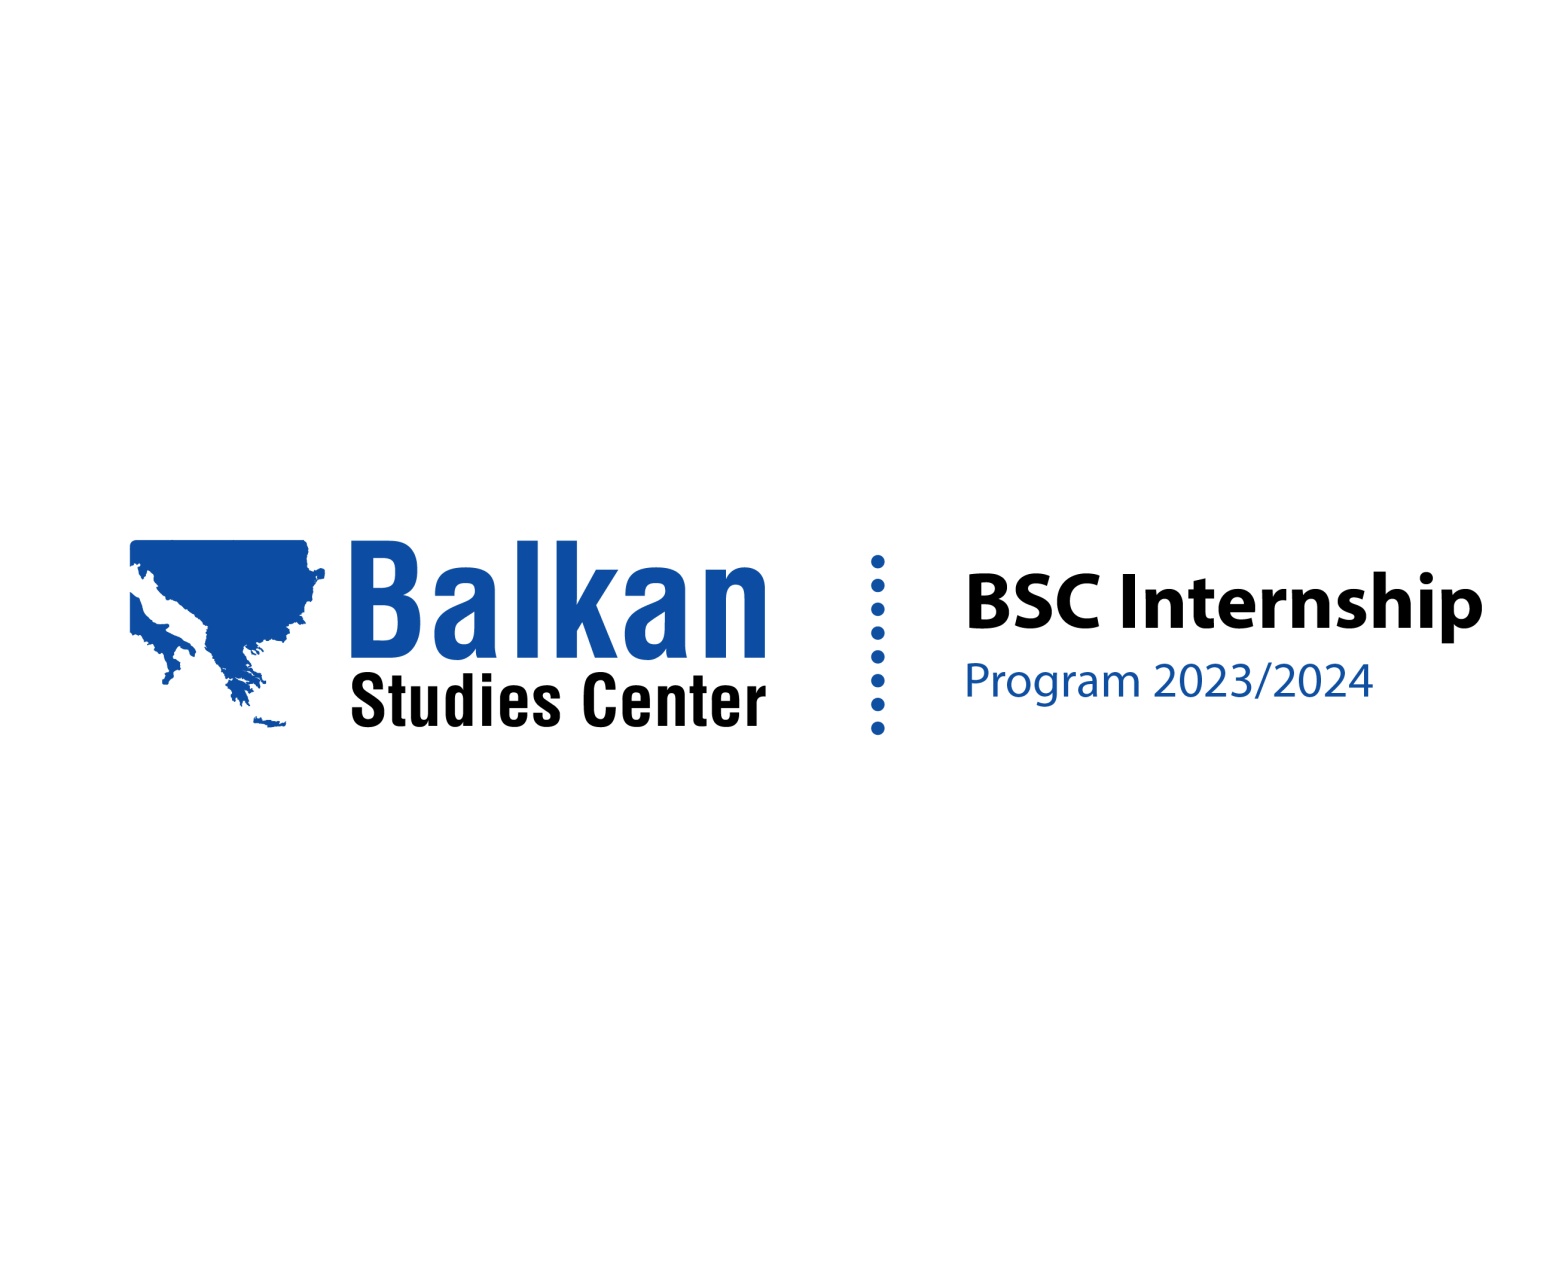 BSC internship